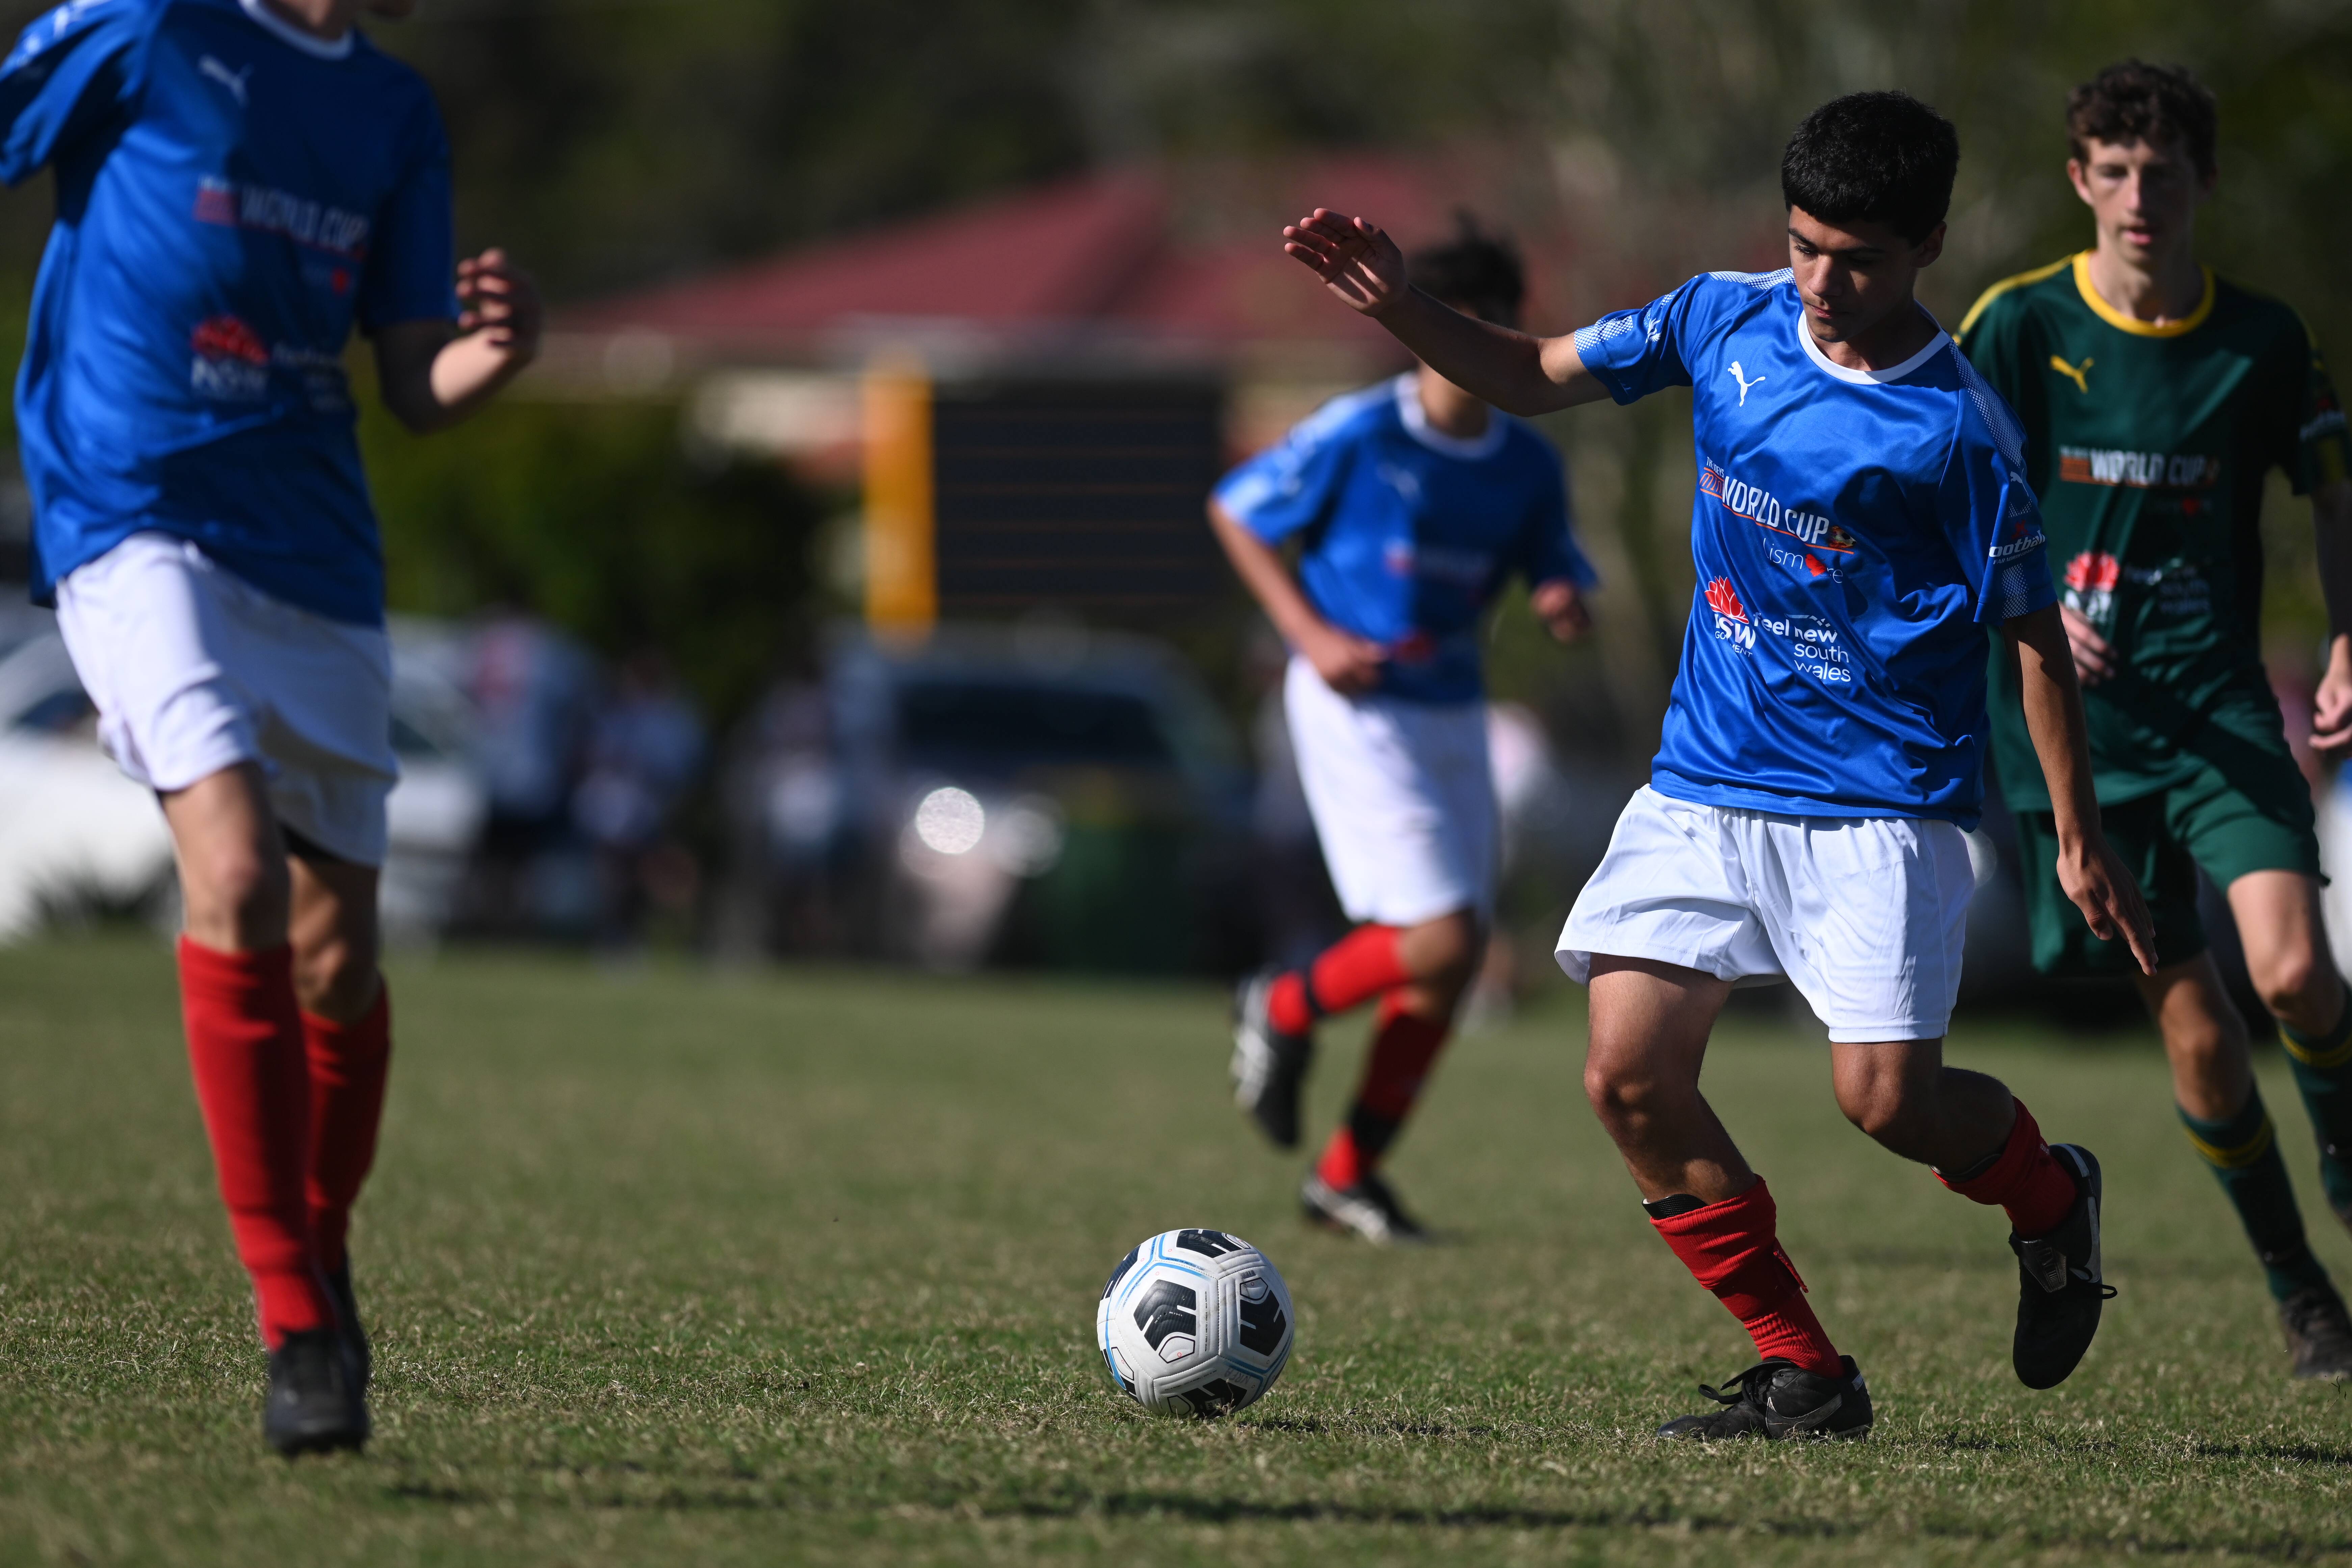 Rale Rasic Joeys Mini World Cup gives young football players path